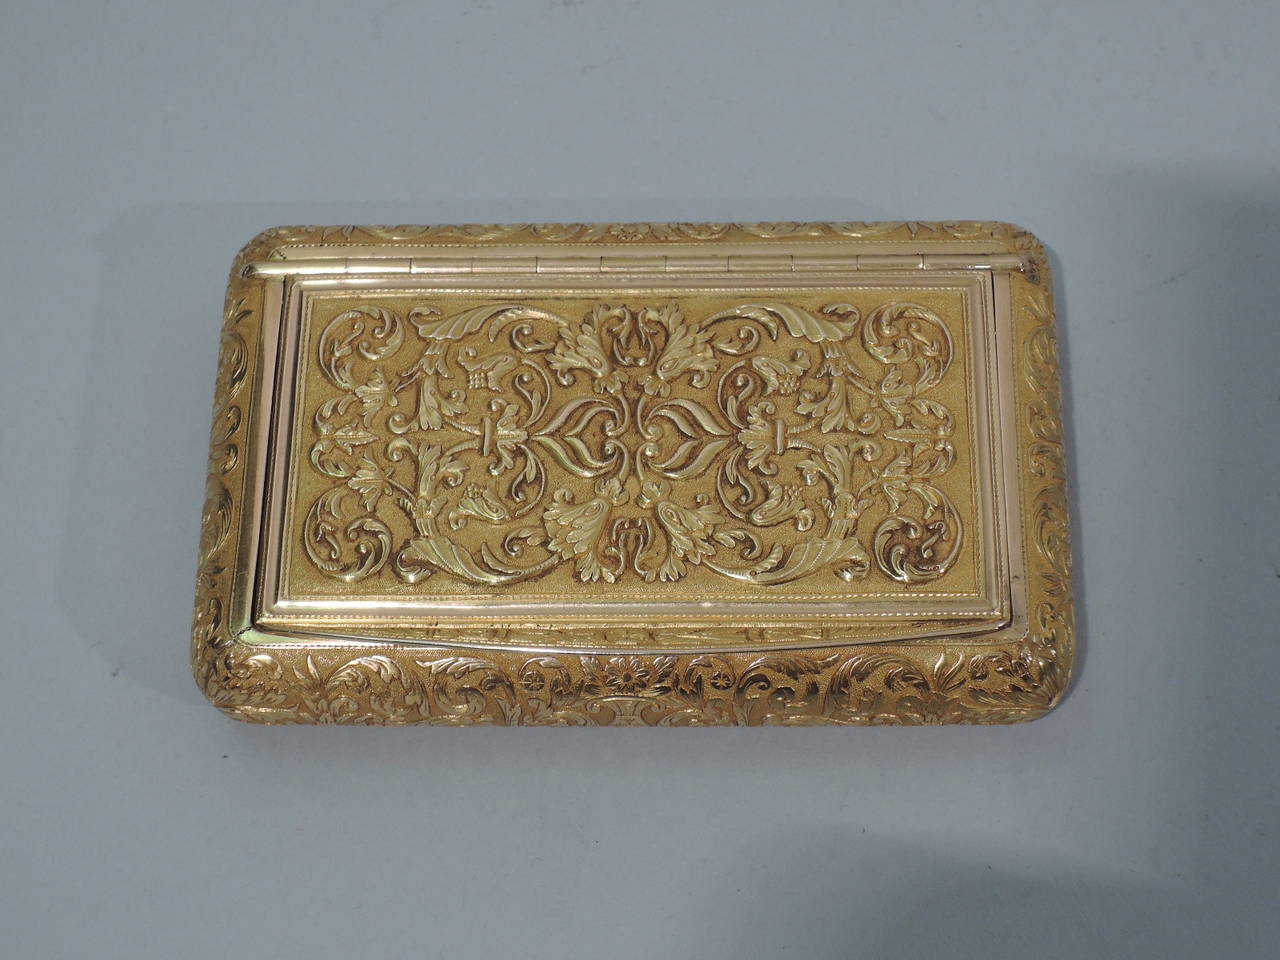 Antique European Gold Snuffbox with Superb Ornament 1